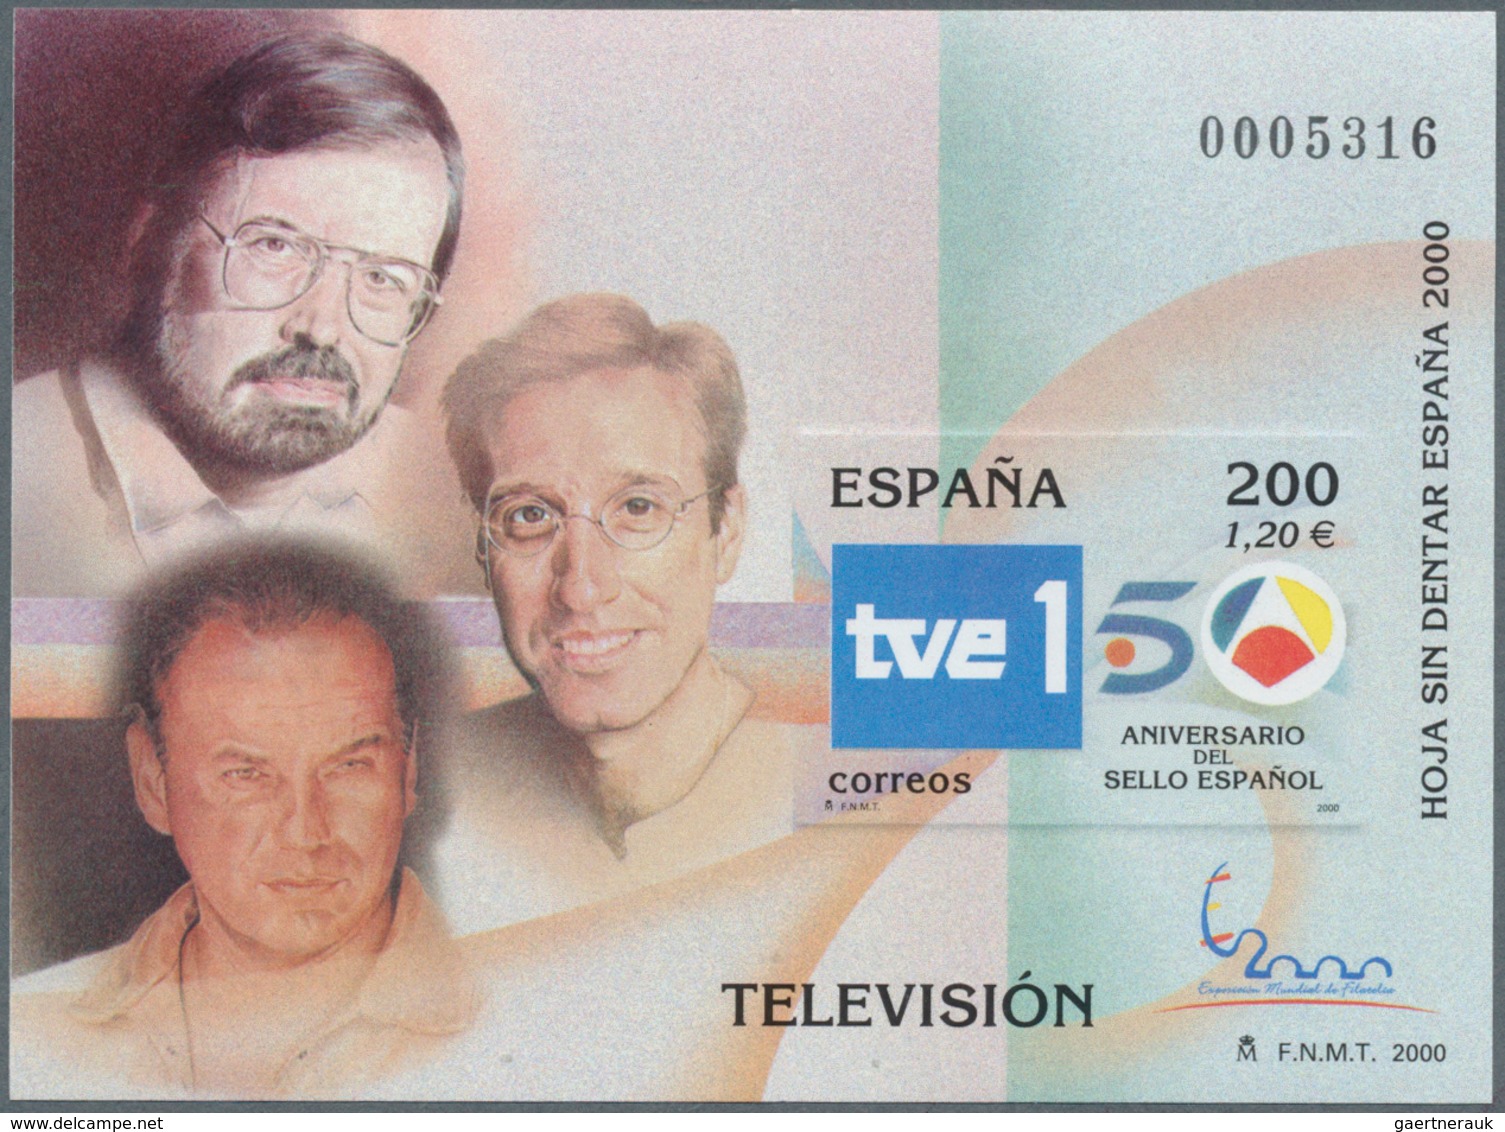 Spanien: 2000. Espana 2000 Intl. Philatelic Exhibition - Set of 11 imperforate souvenir sheets overp